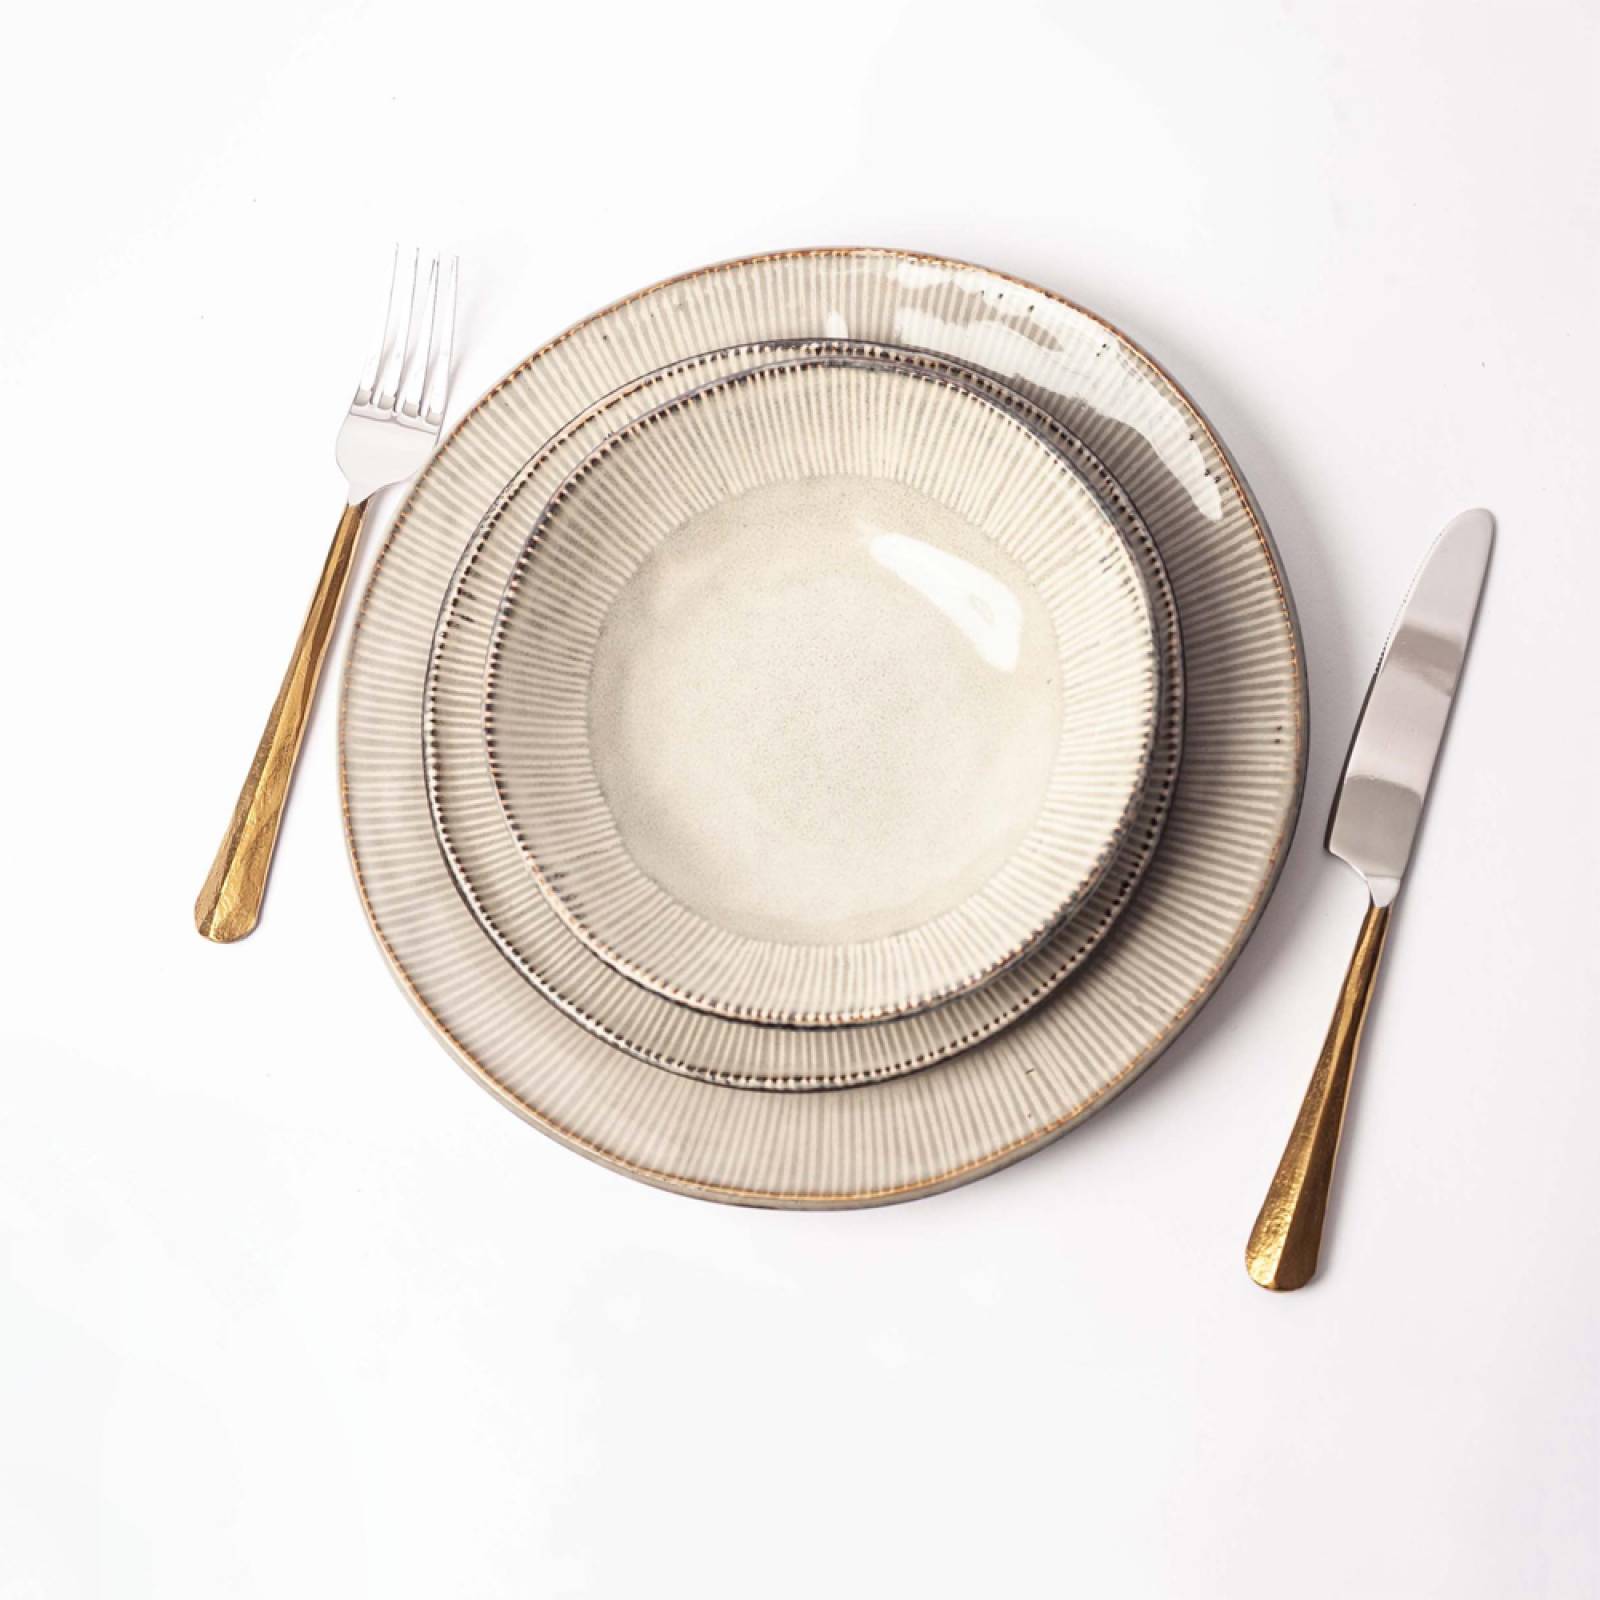 Malia Dinner Plate In Cream thumbnails